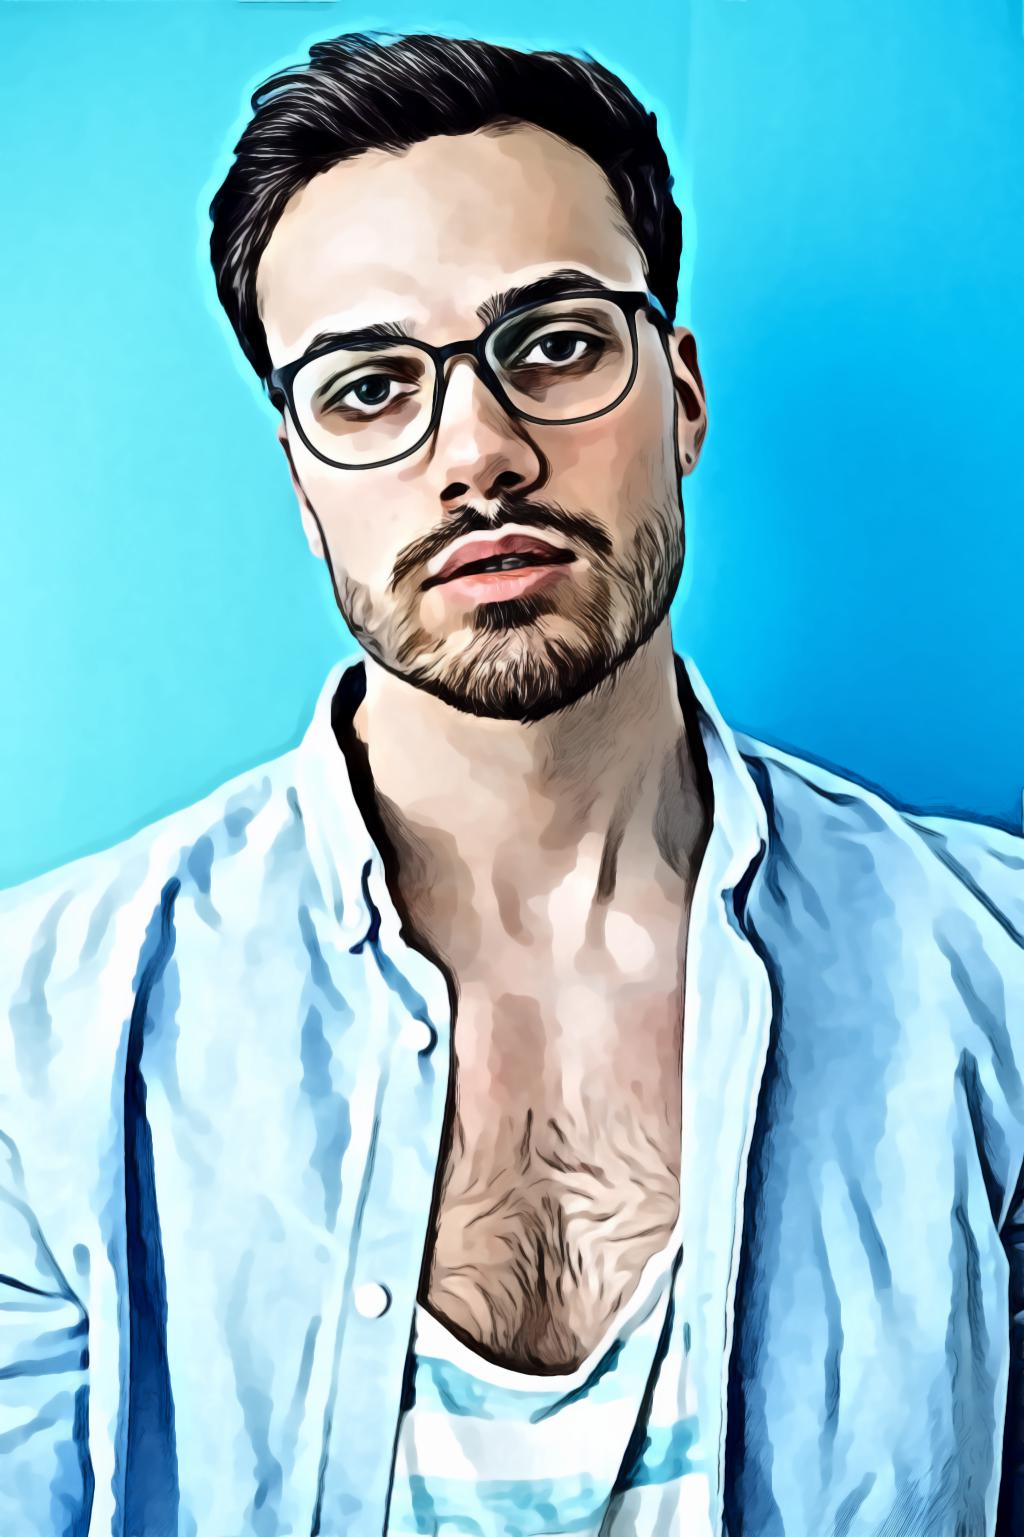 Man in Black Framed Eyeglasses and Blue Button-up Shirt